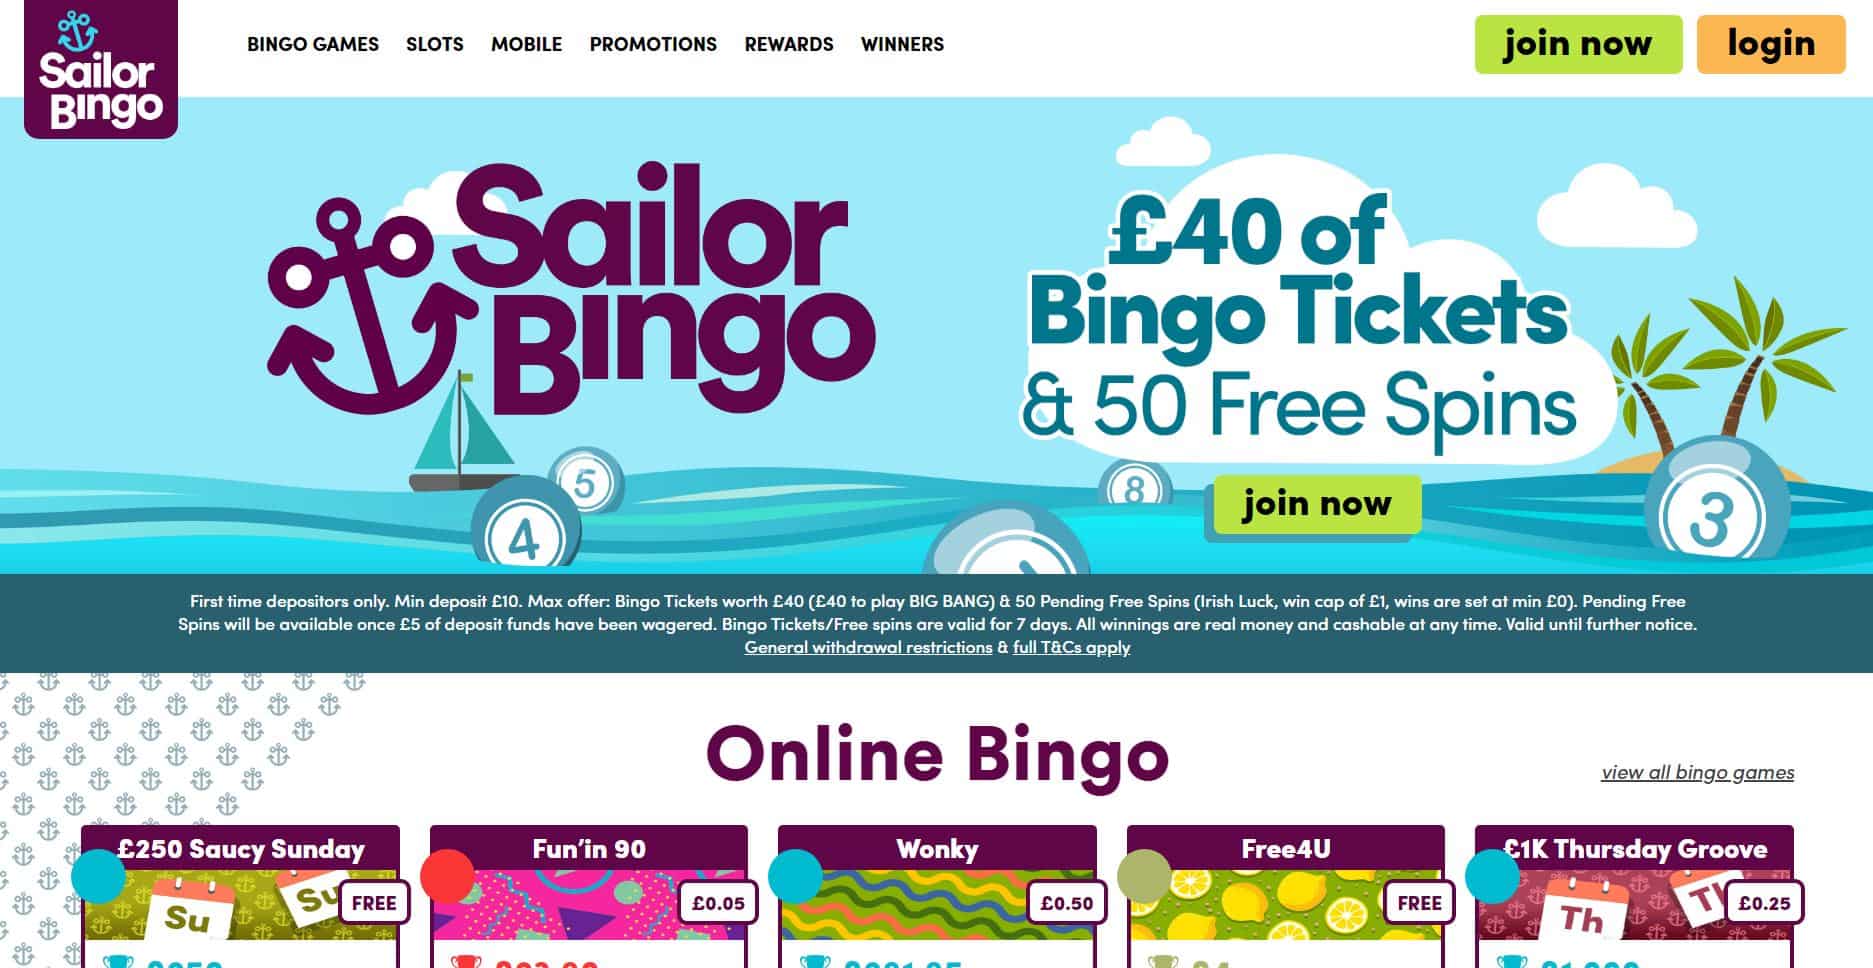 jogar bingo online come sailor bingo